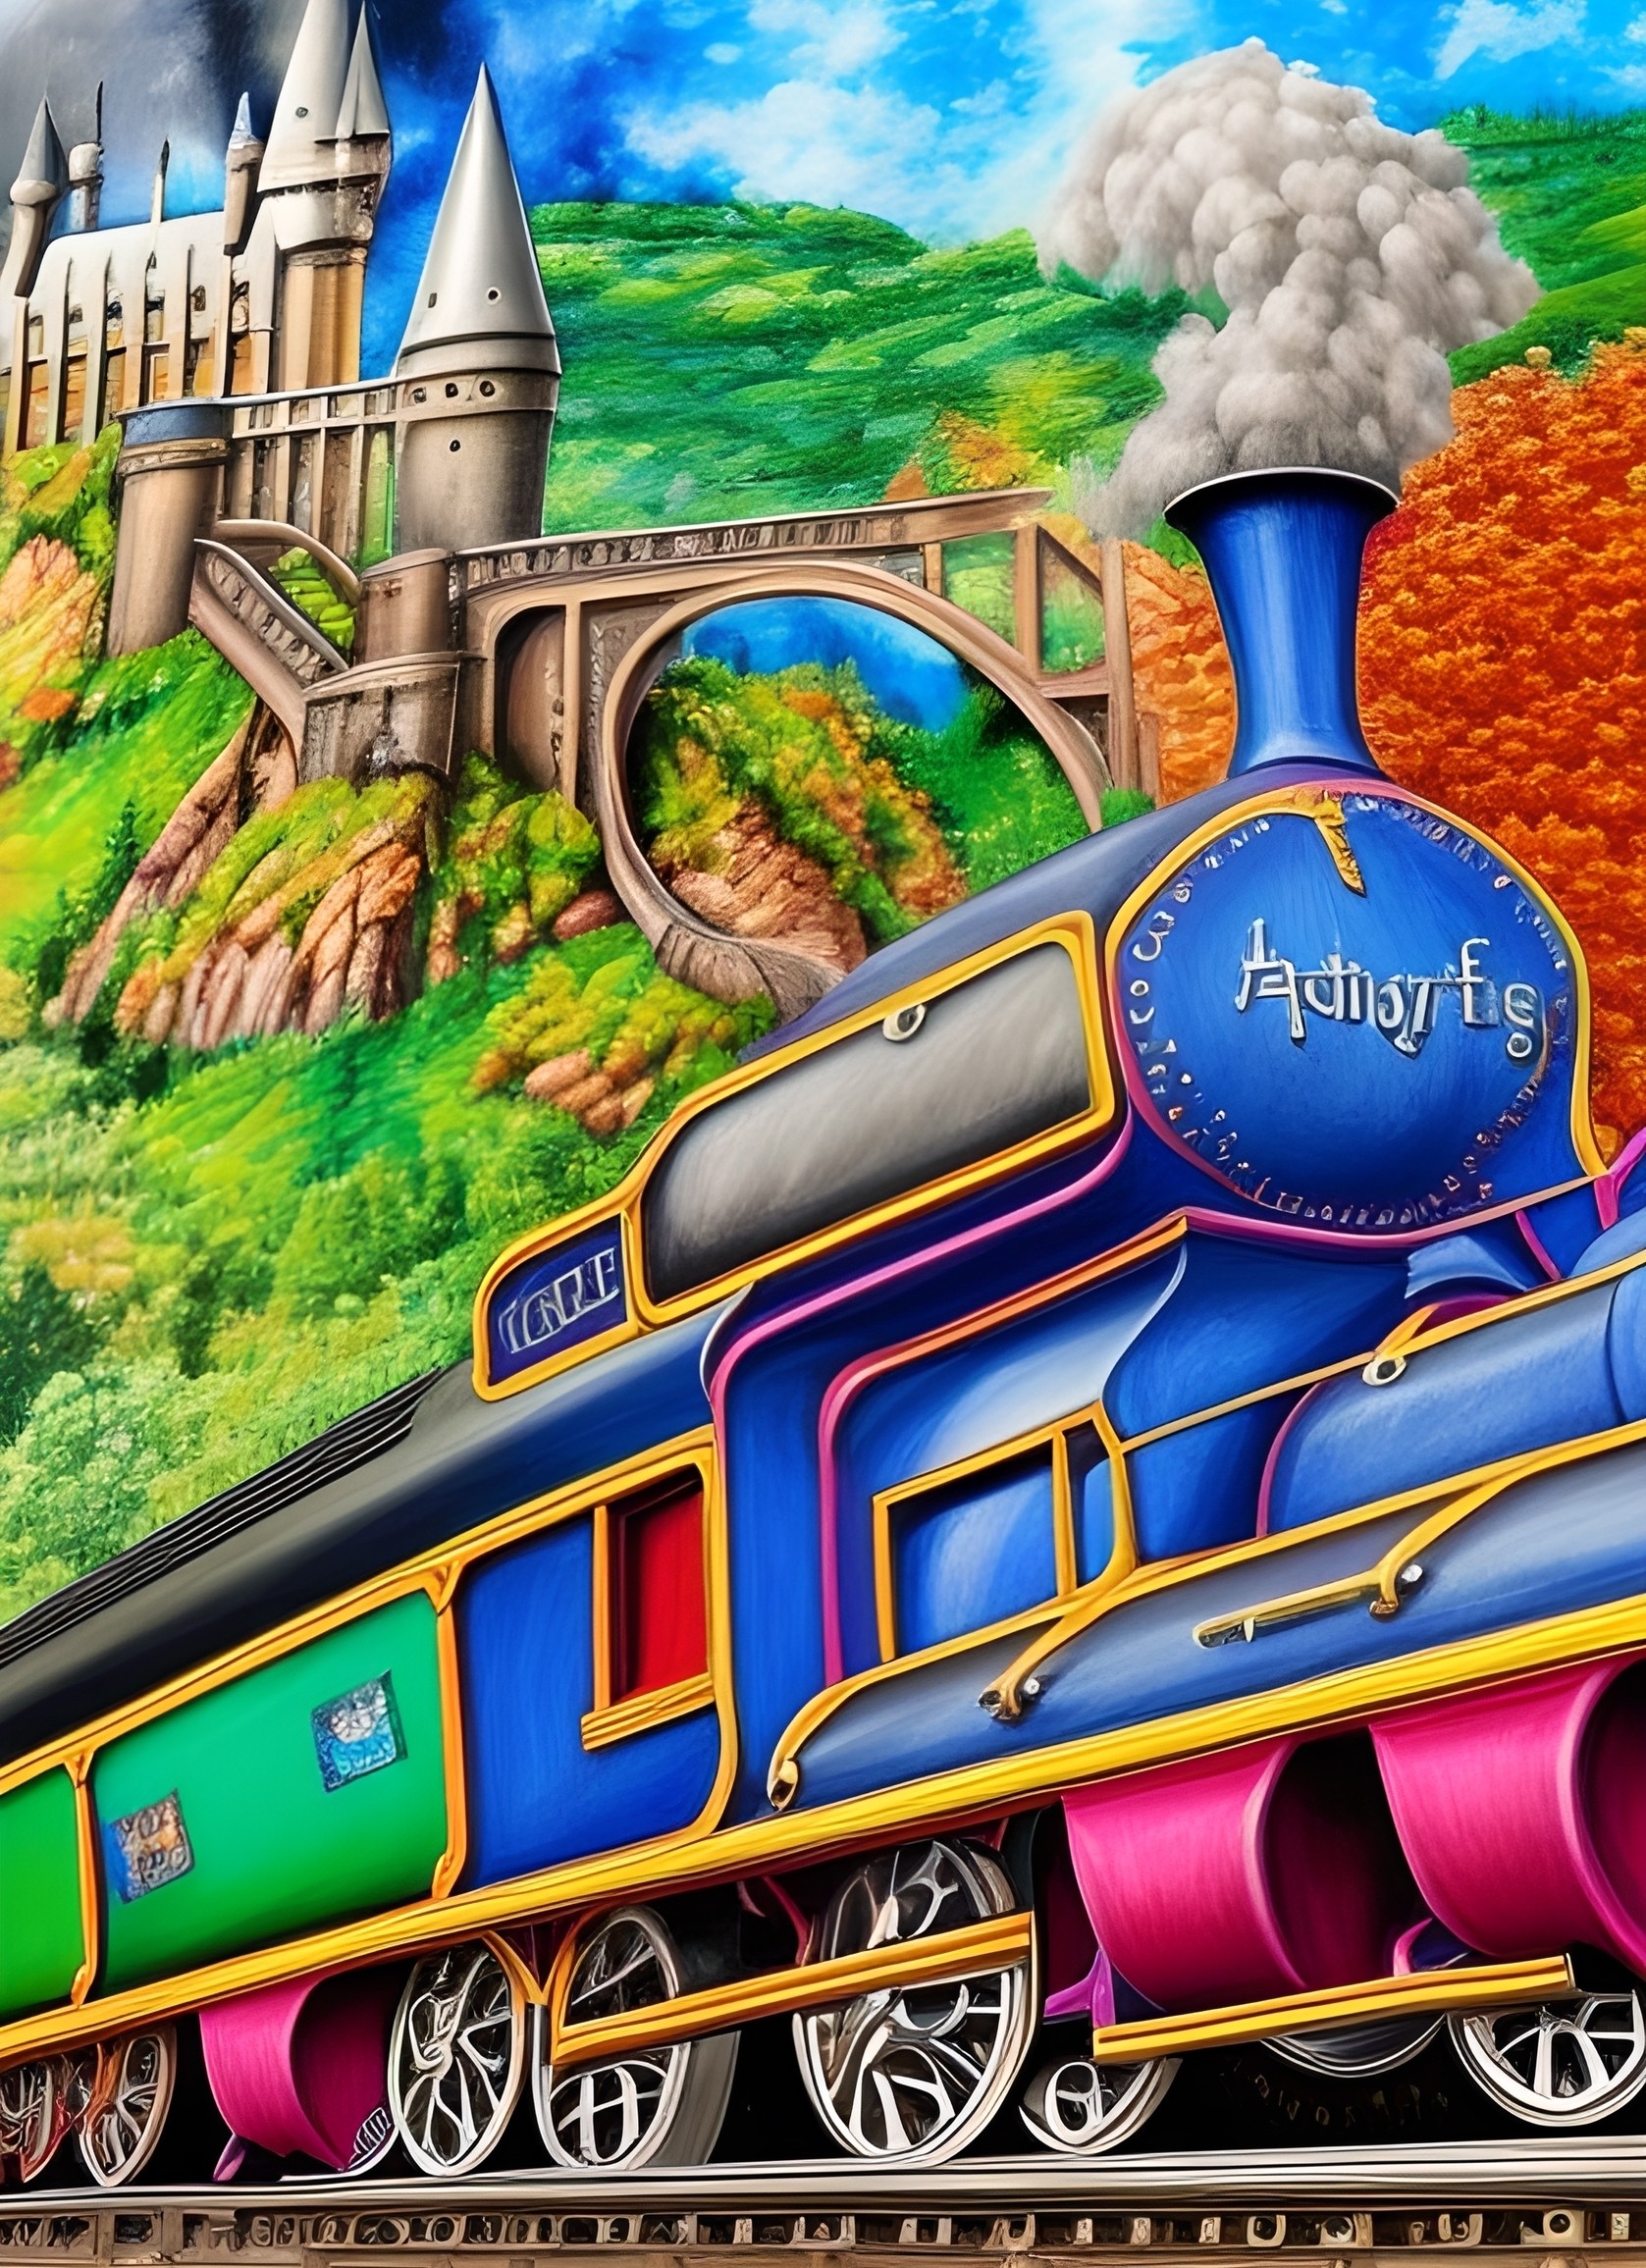 Steam Train Colourful Art Scene Blank Greeting Card